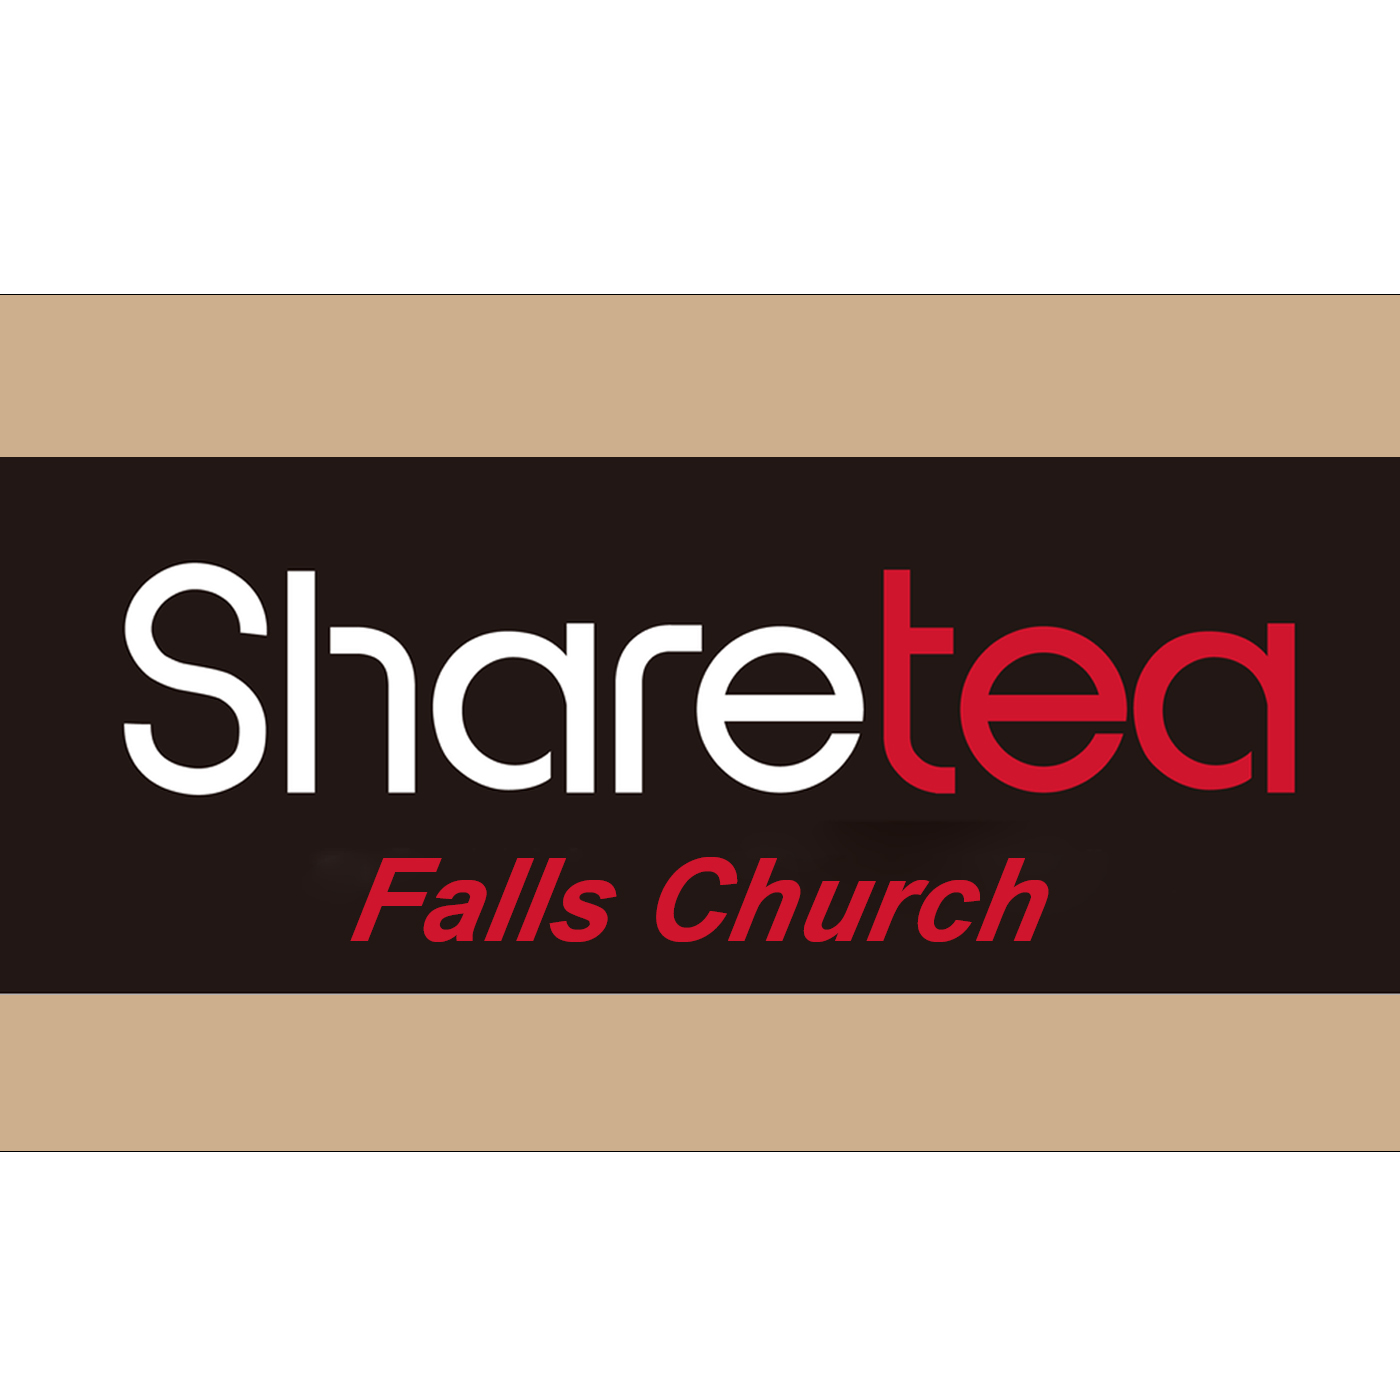 Sharetea Falls Church